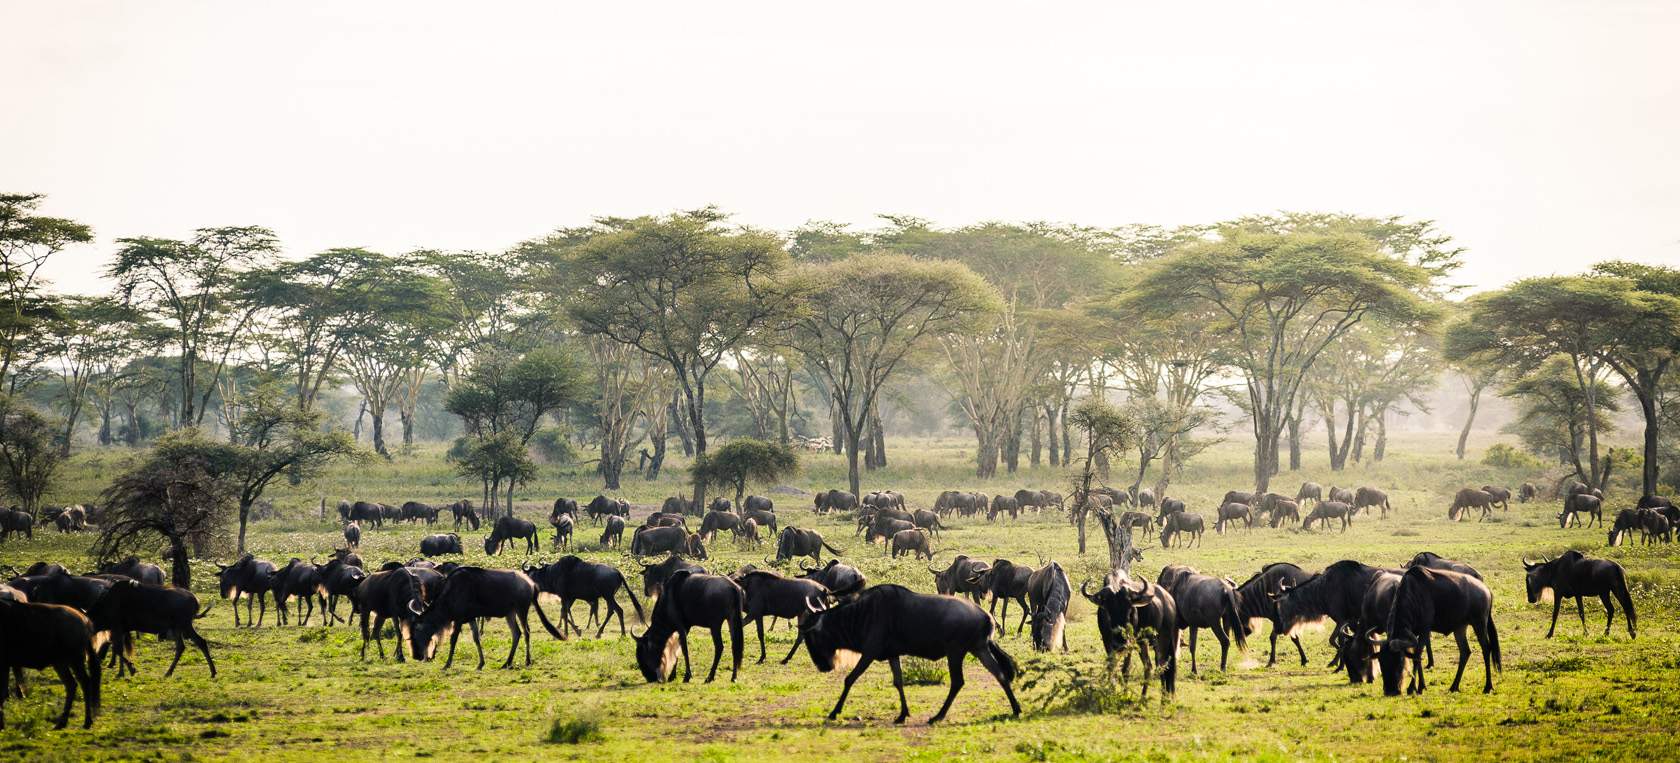 great migration safaris